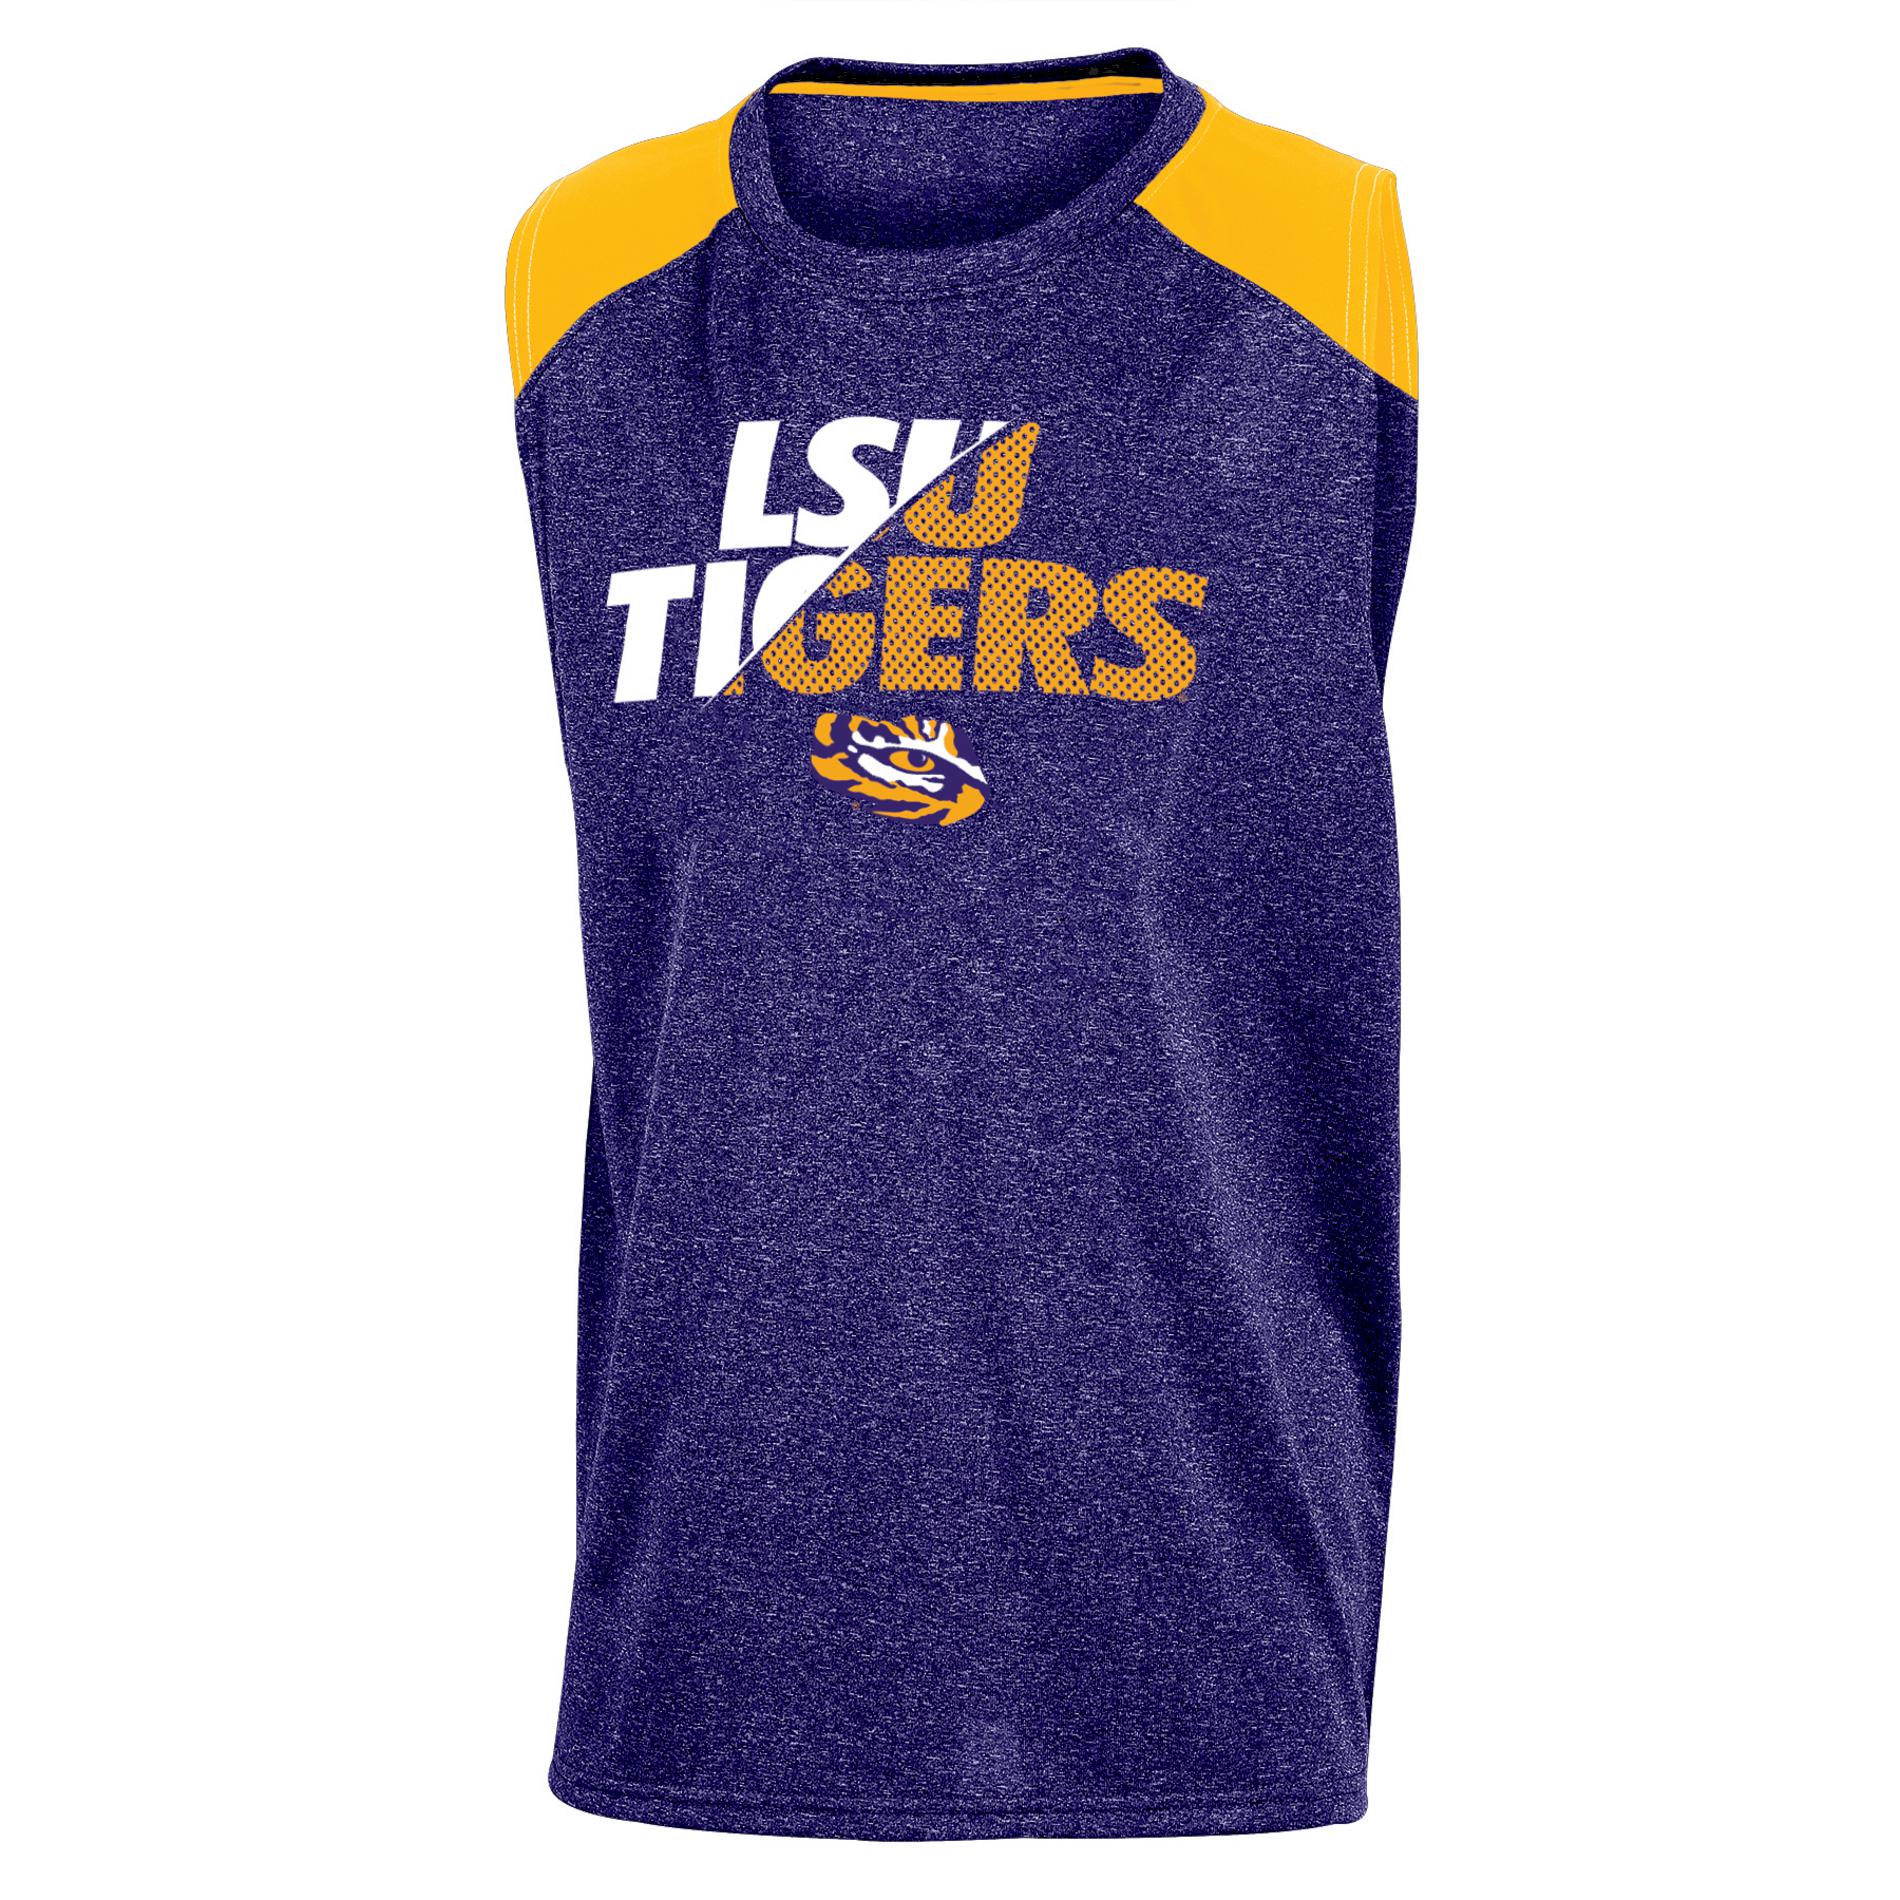 NCAA Boys' Muscle Shirt - Louisiana State Tigers